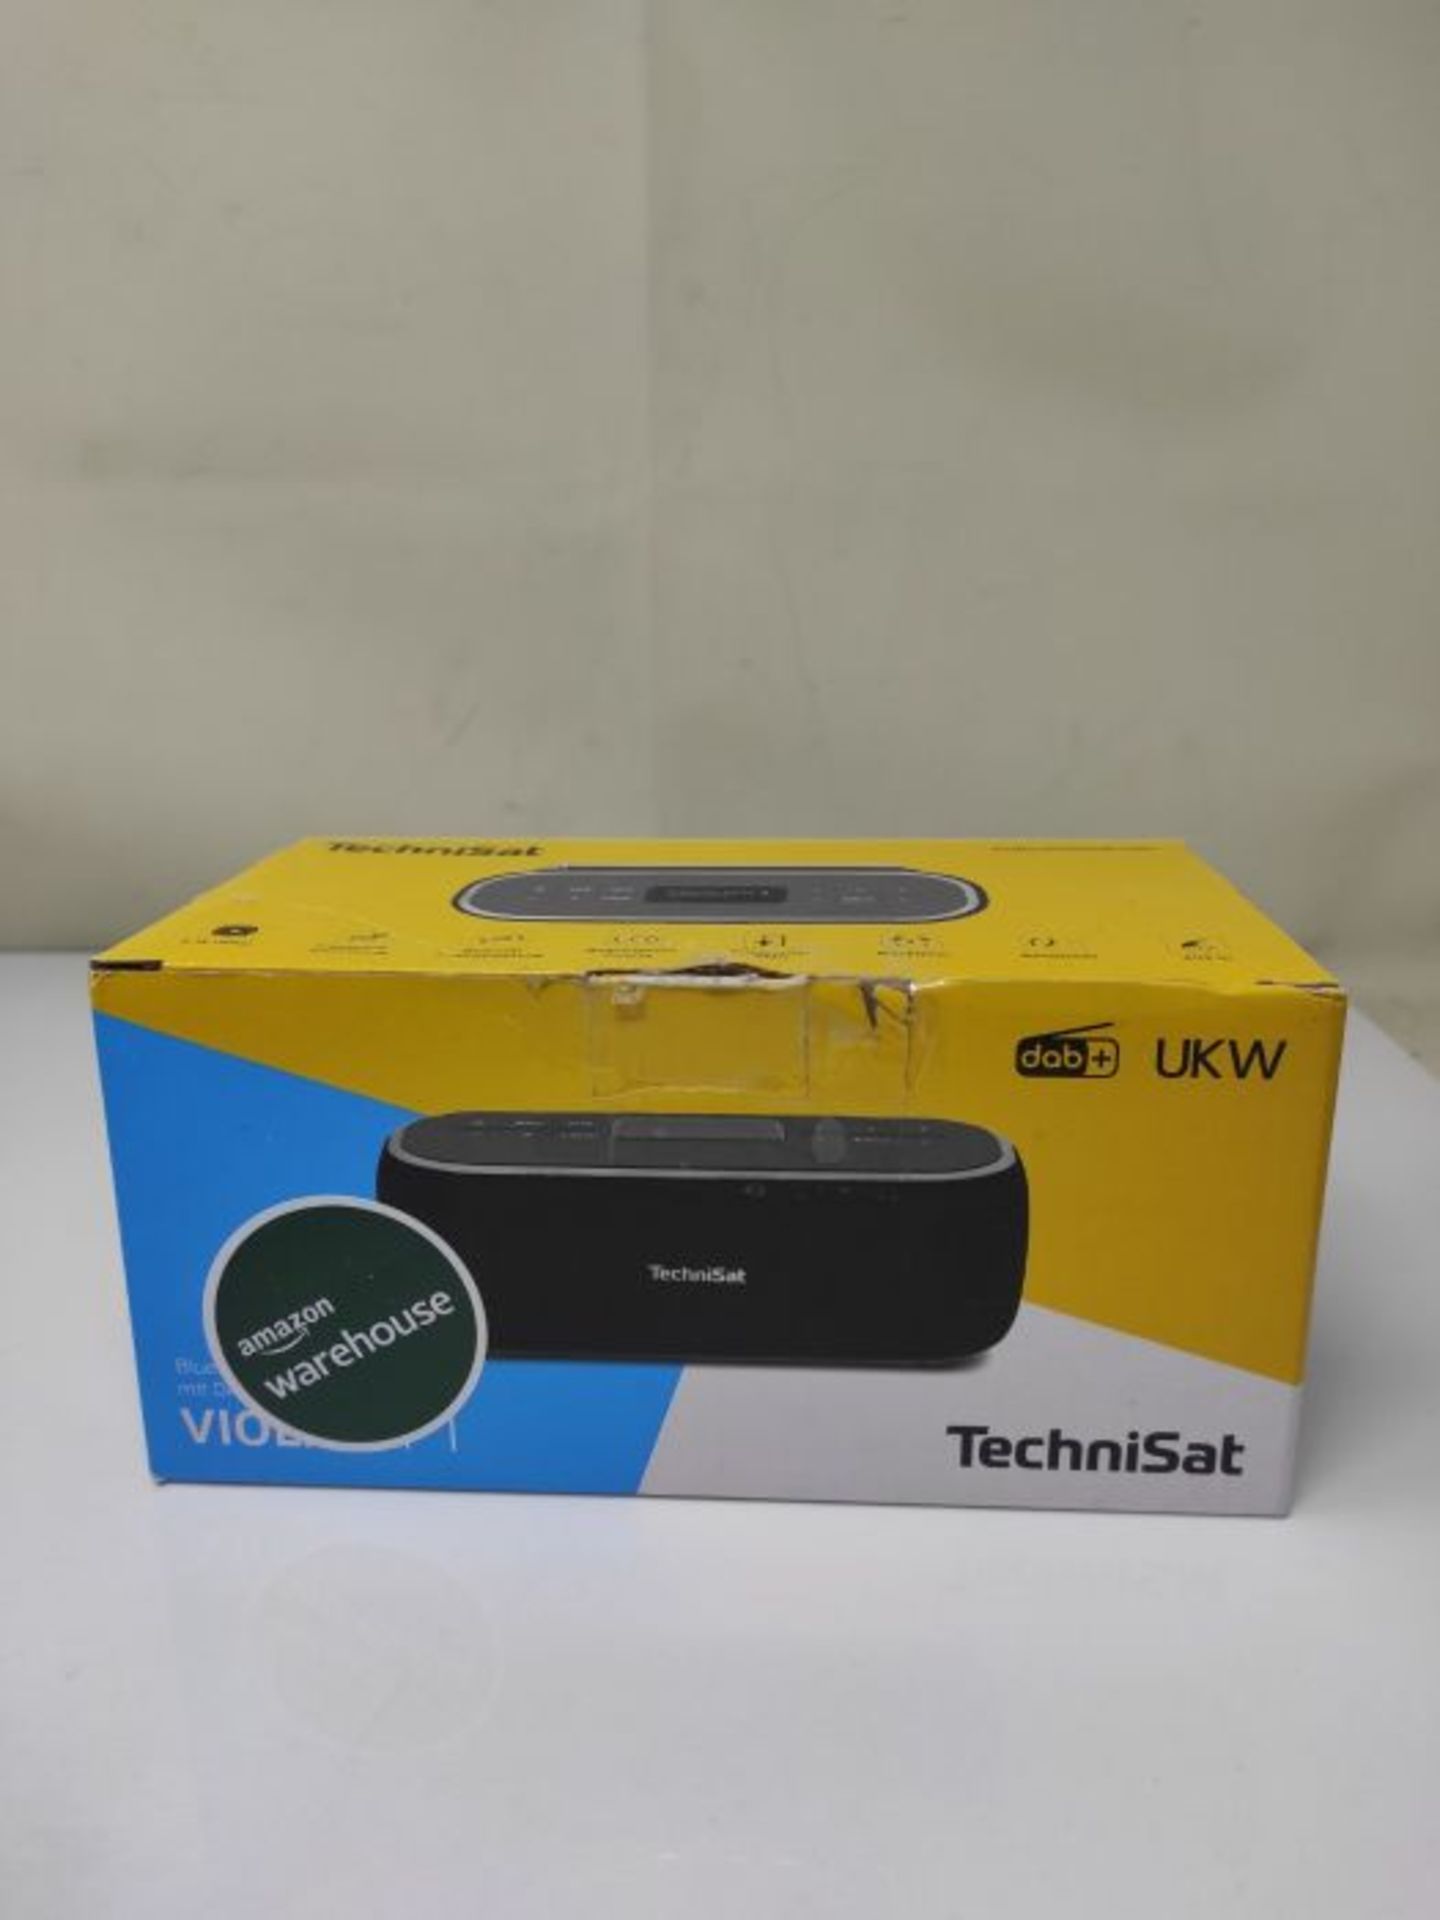 RRP £55.00 TechniSat Viola BT 1 Portable Bluetooth Speaker with DAB+ Digital Radio (FM, DAB, Cloc - Image 2 of 3